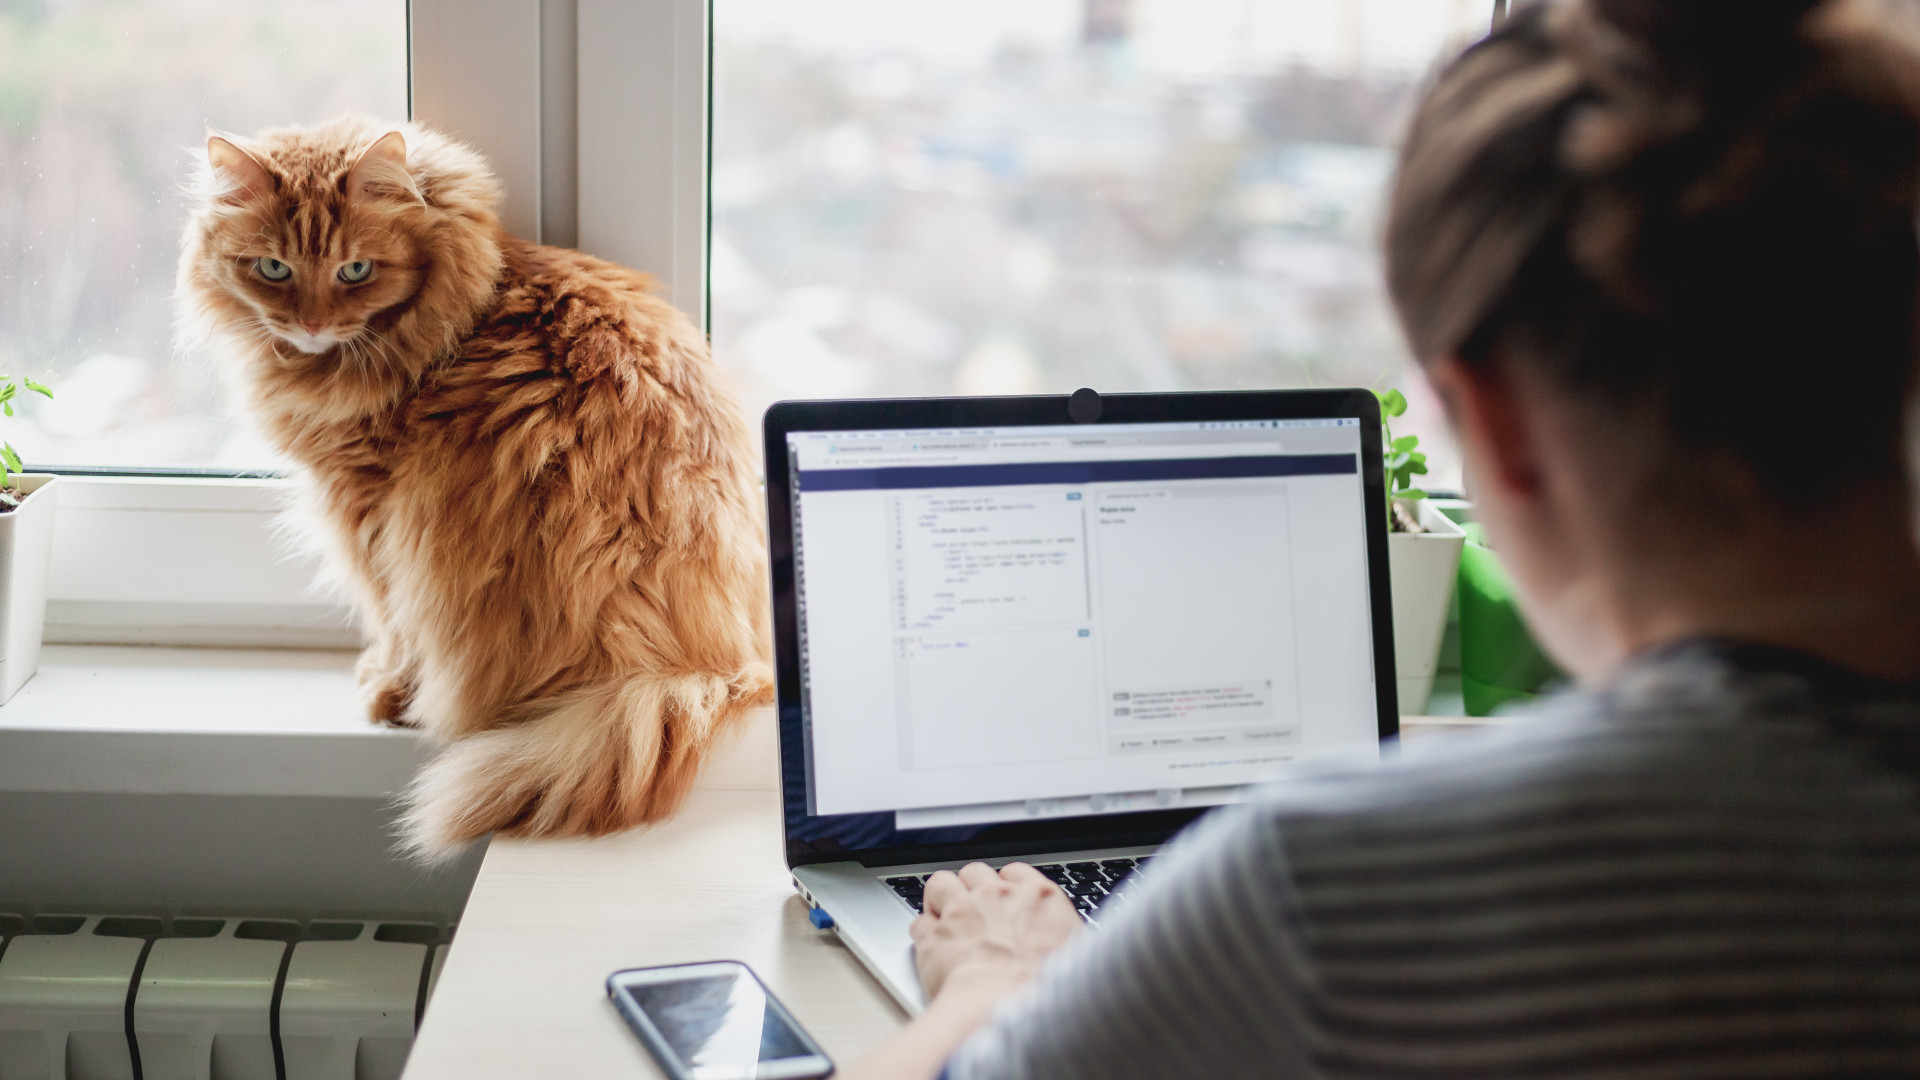 Wanita yang sedang mengerjakan laptop Windows 10 sementara kucingnya melihat ke arahnya dengan tidak setuju.  Ponselnya juga ada di atas meja.